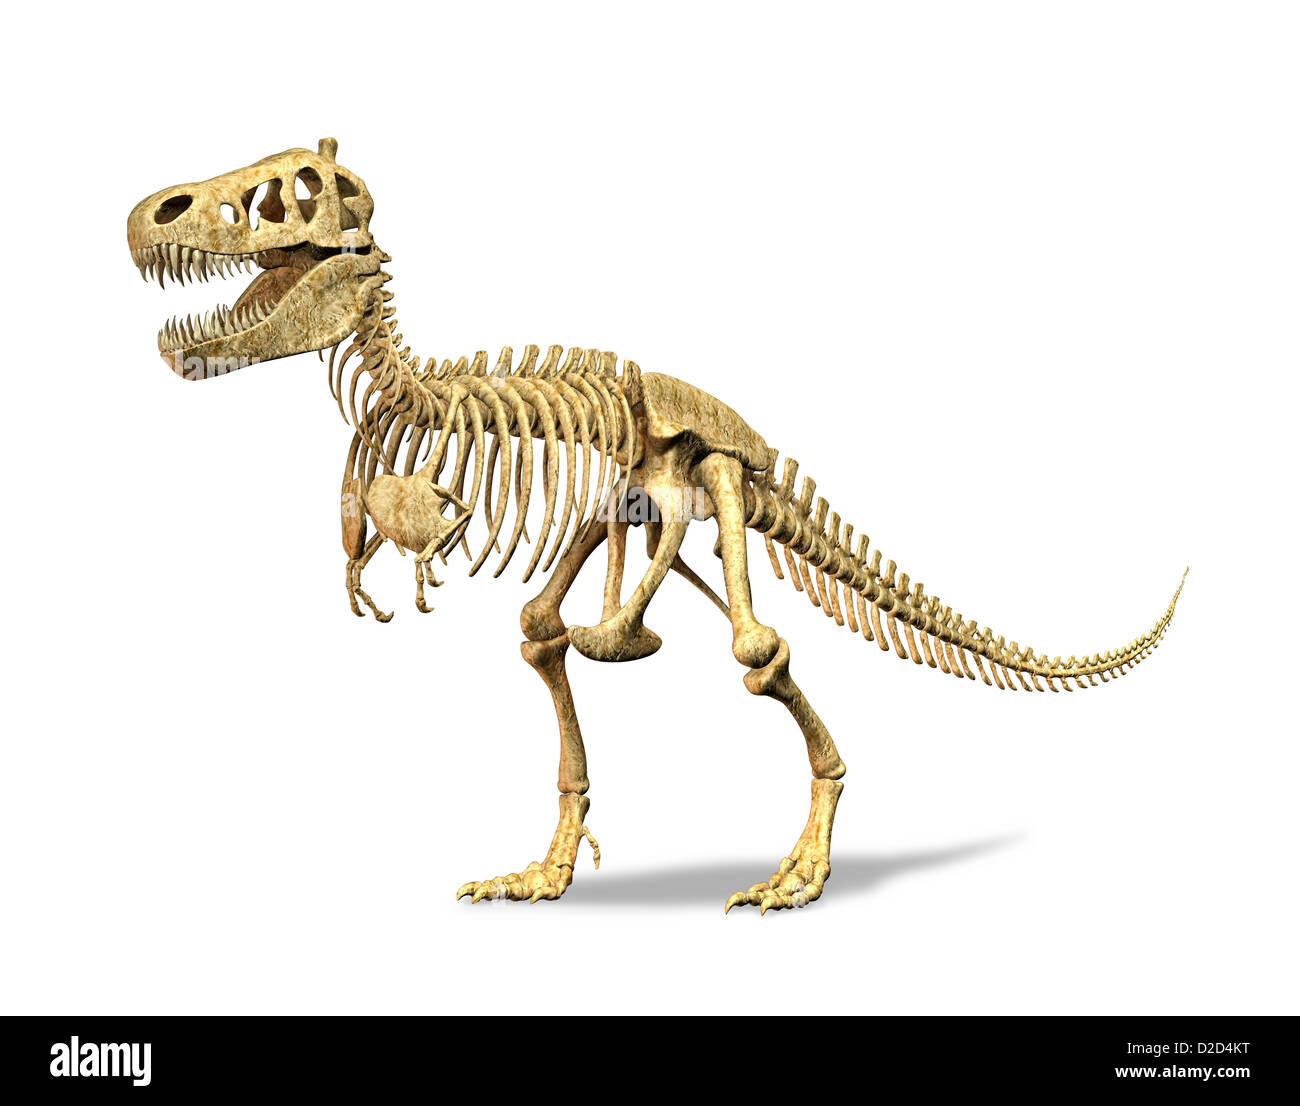 鍔 zoo Rancio Tyrannosaurus rex skeleton T Rex dinosaurio carnívoro que mide 5 metros de  altura y pesa 7 toneladas Fotografía de stock - Alamy